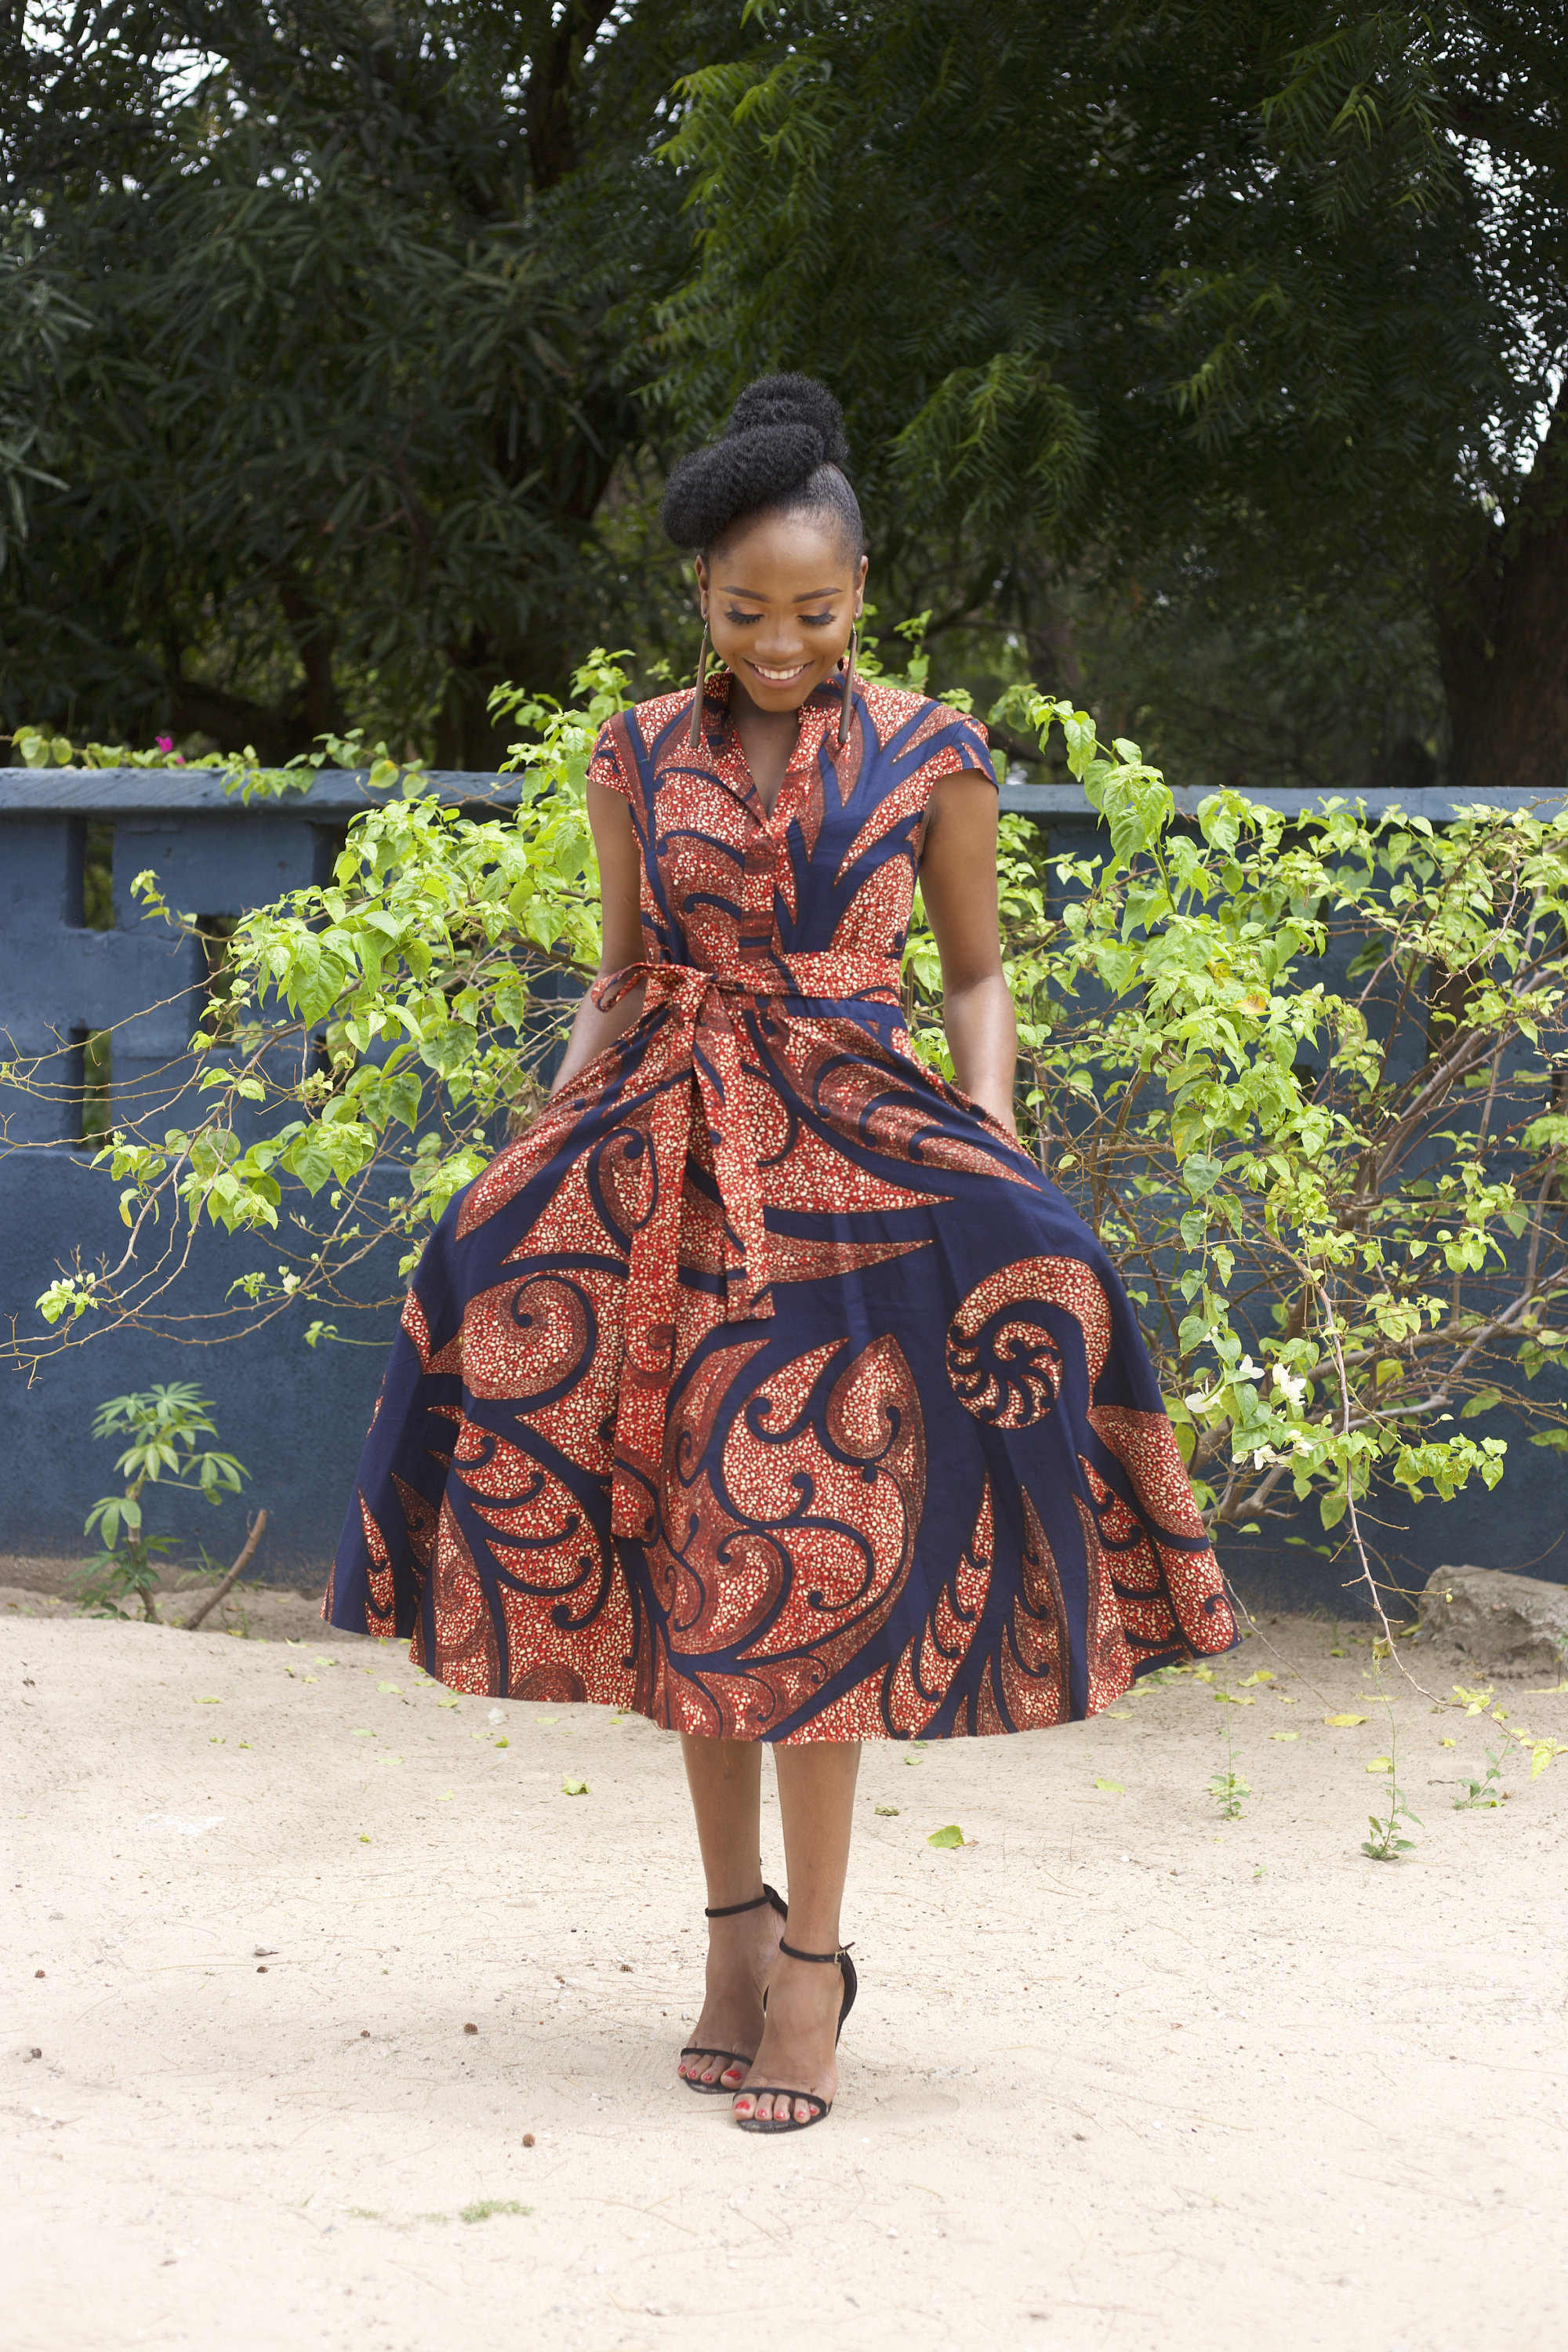 Stylish African dress Ankara dress African print dress -  Portugal